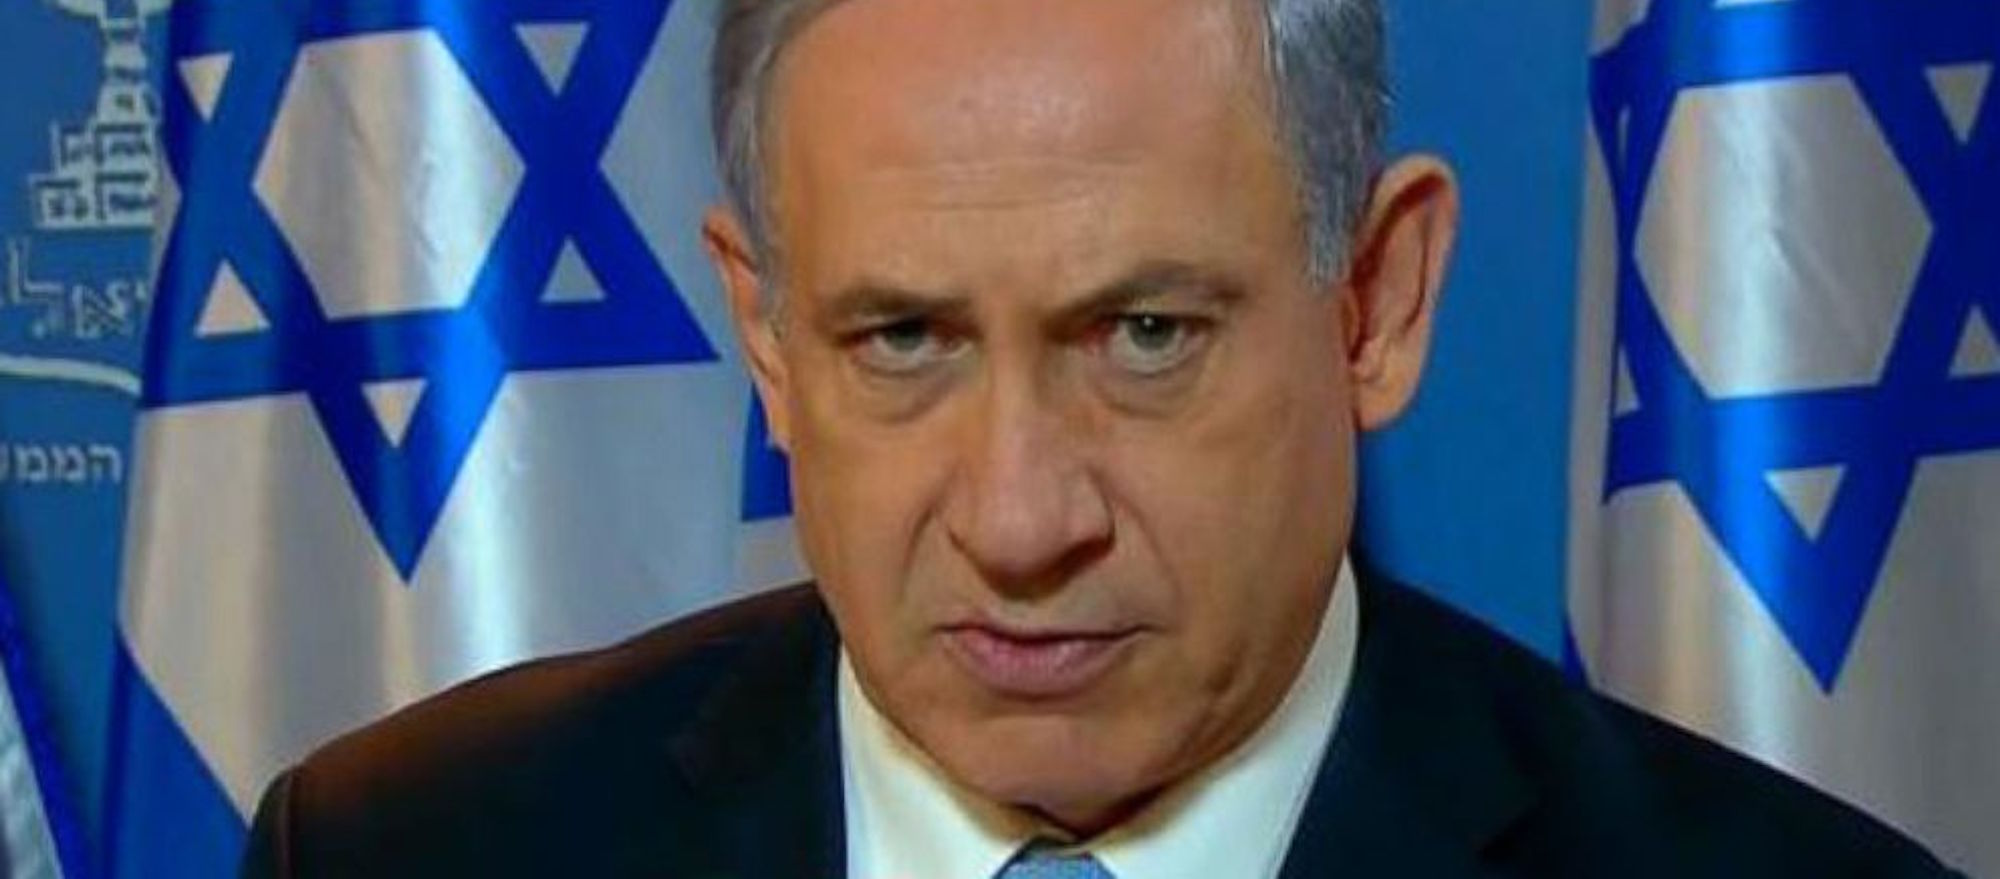 Netanyahu “Under Unusual Stress” over Prospect of ICC Arrest Warrant